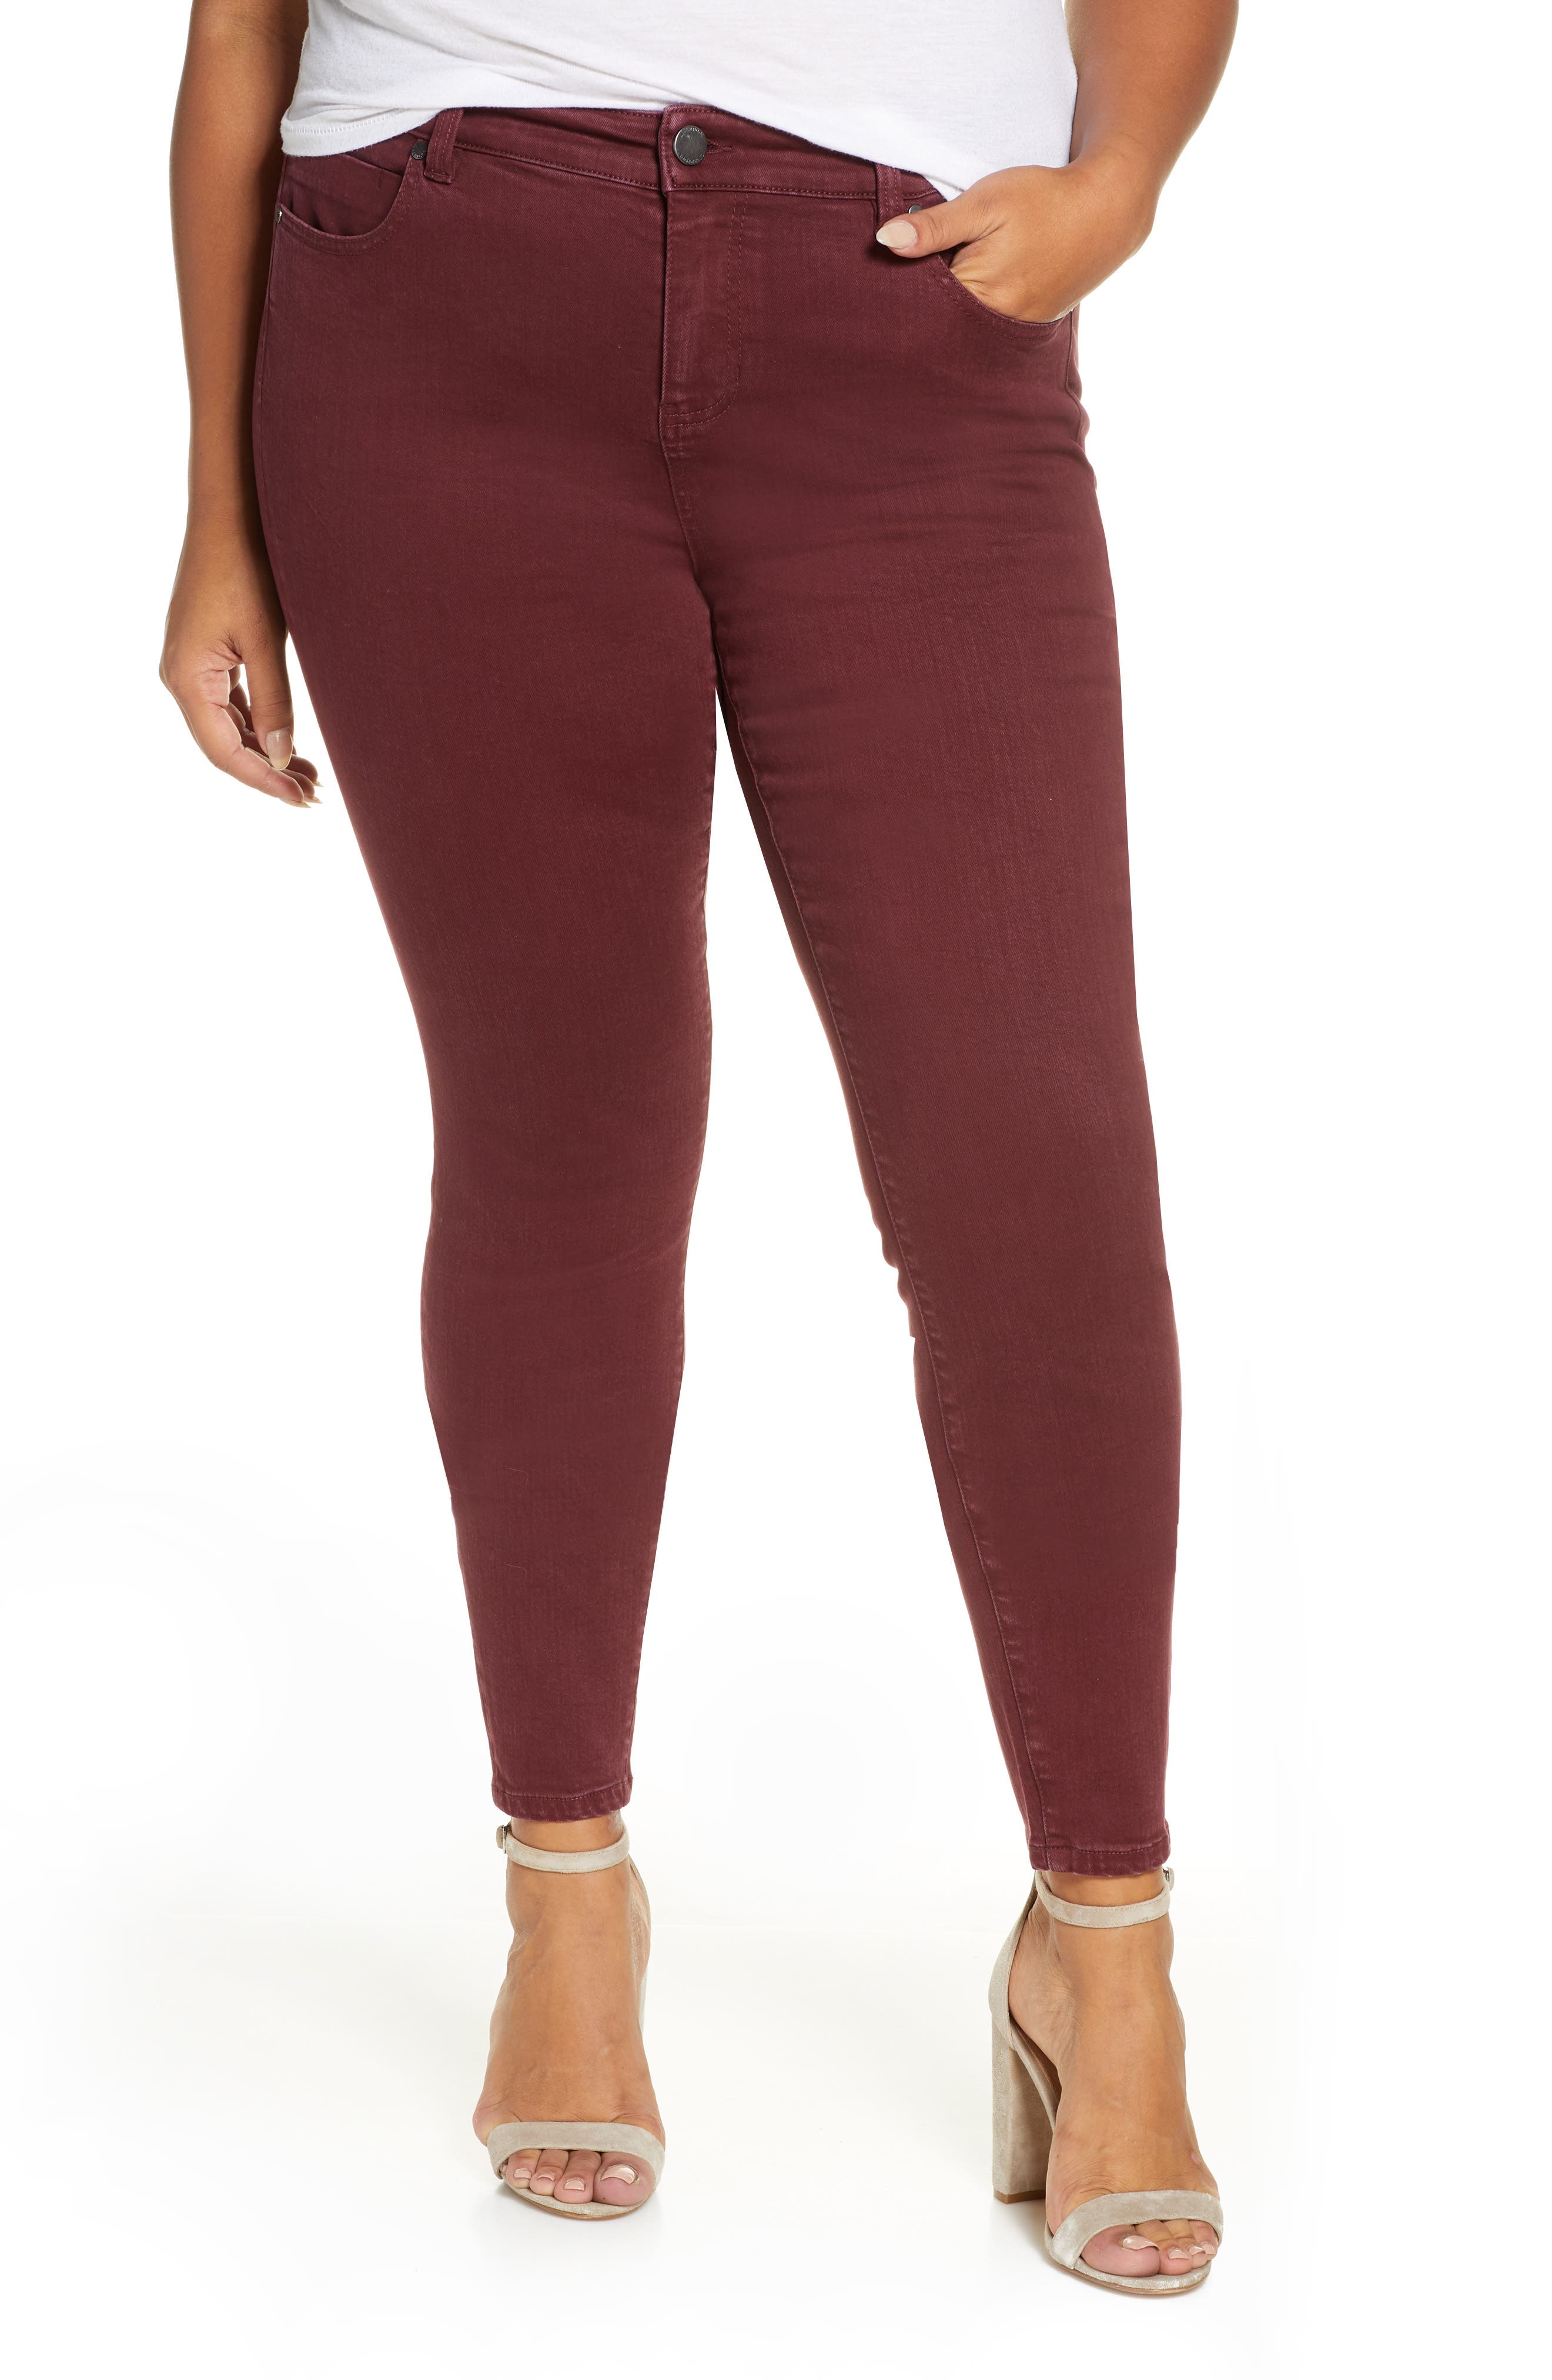 burgundy jeans plus size